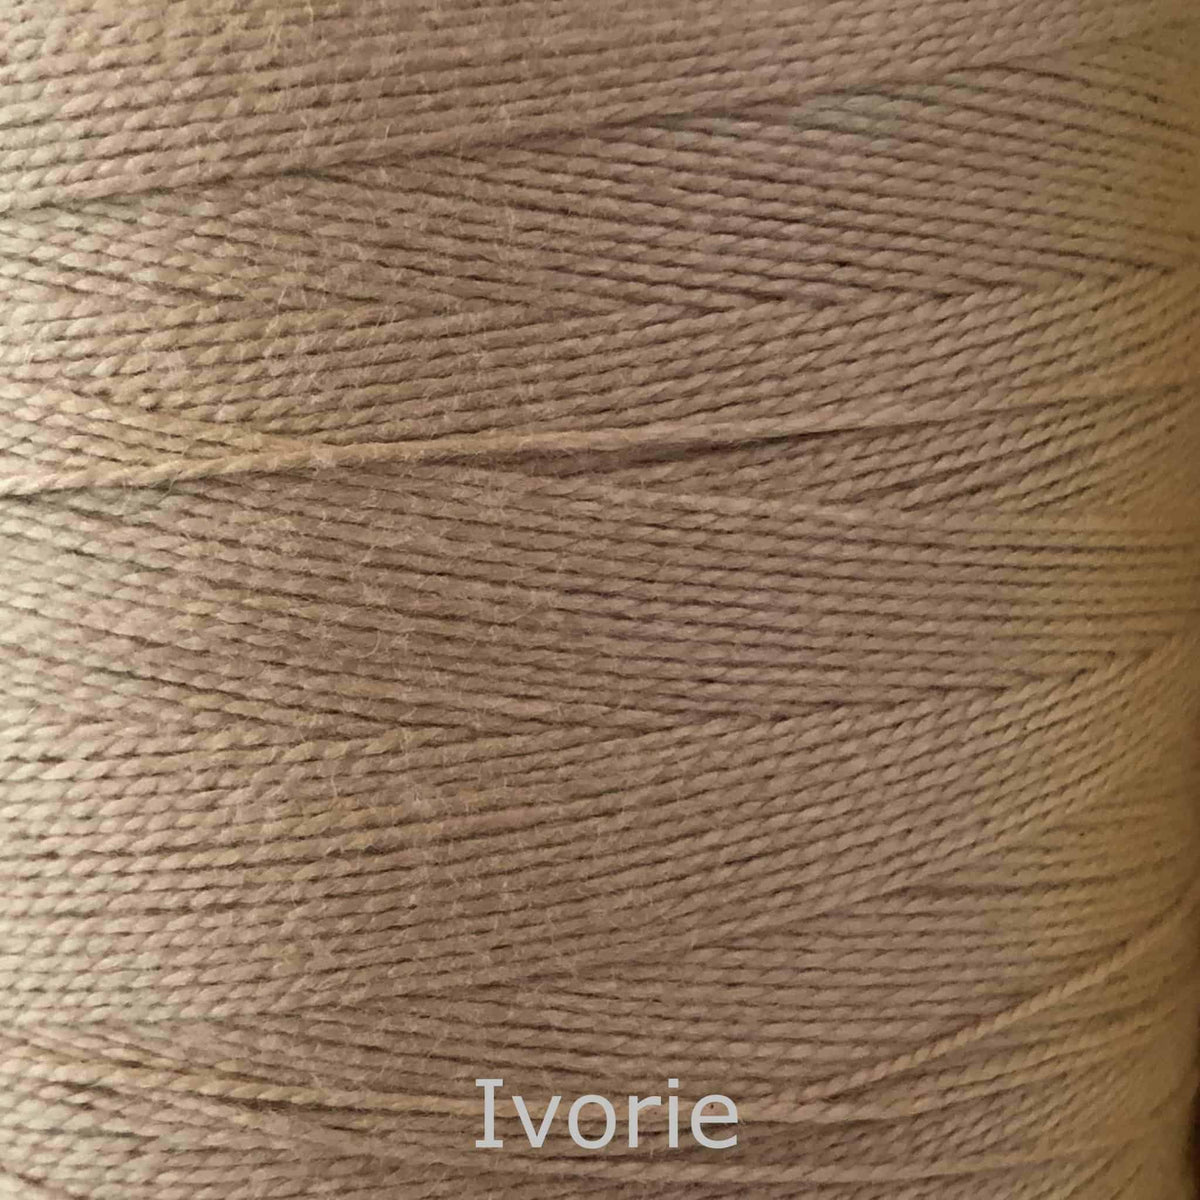 16/2 cotton weaving yarn ivorie